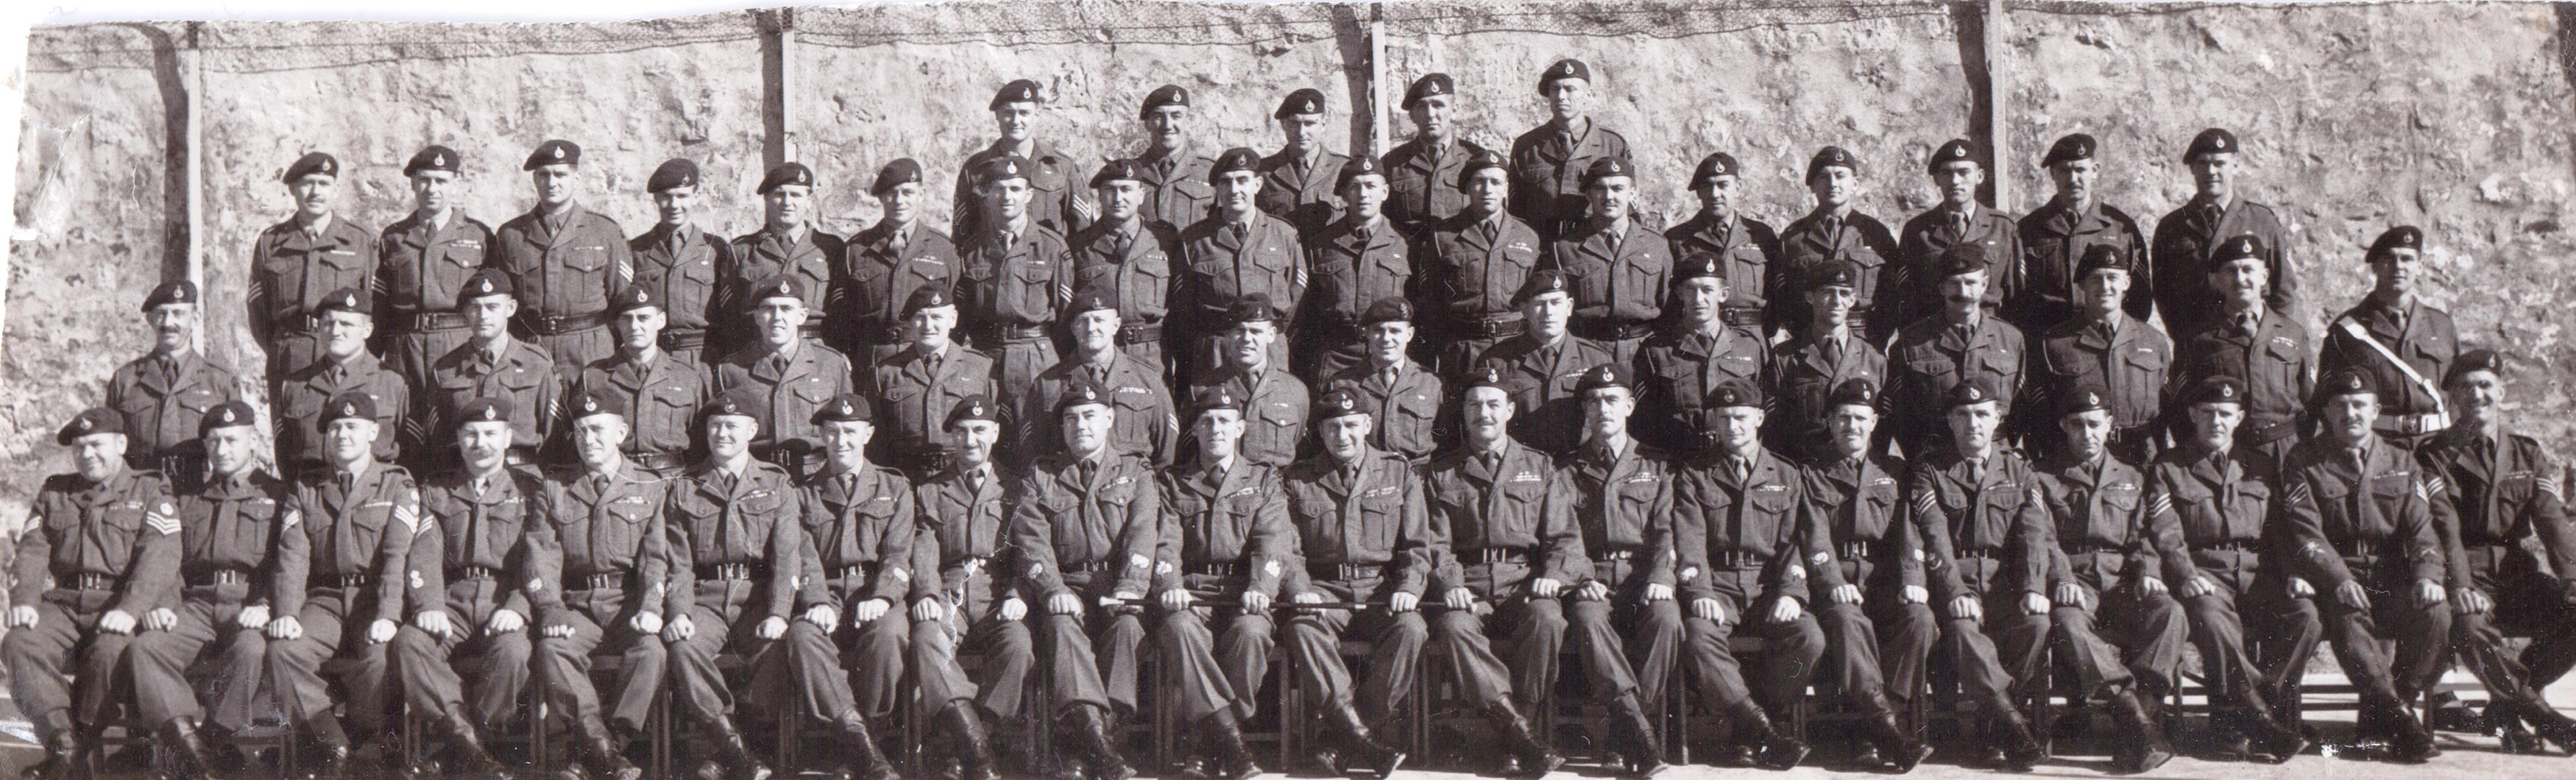 45 Commando RM,  Imtarfa Barracks, Malta,1958